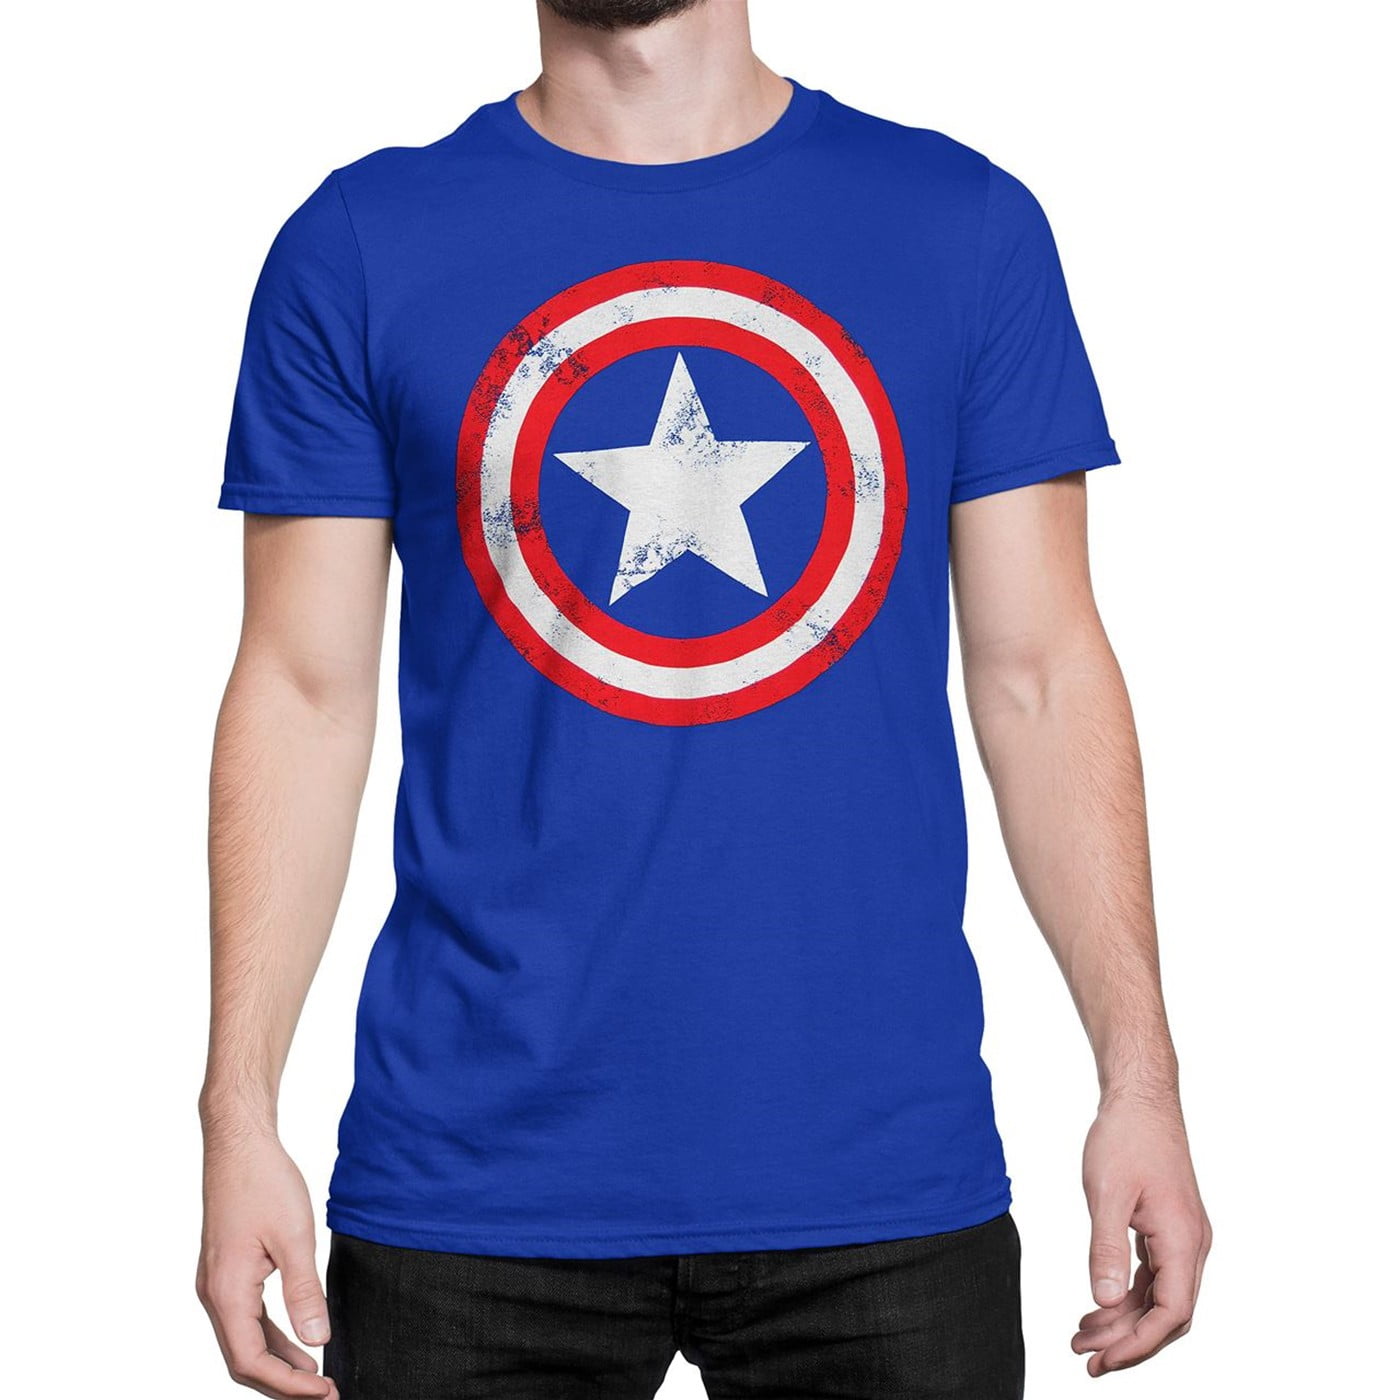 T shield. Футболка Капитан Америка. Футболка Капитан Америка мужская. Майка Капитан Америка. Adidas футболка с капитаном Америка.